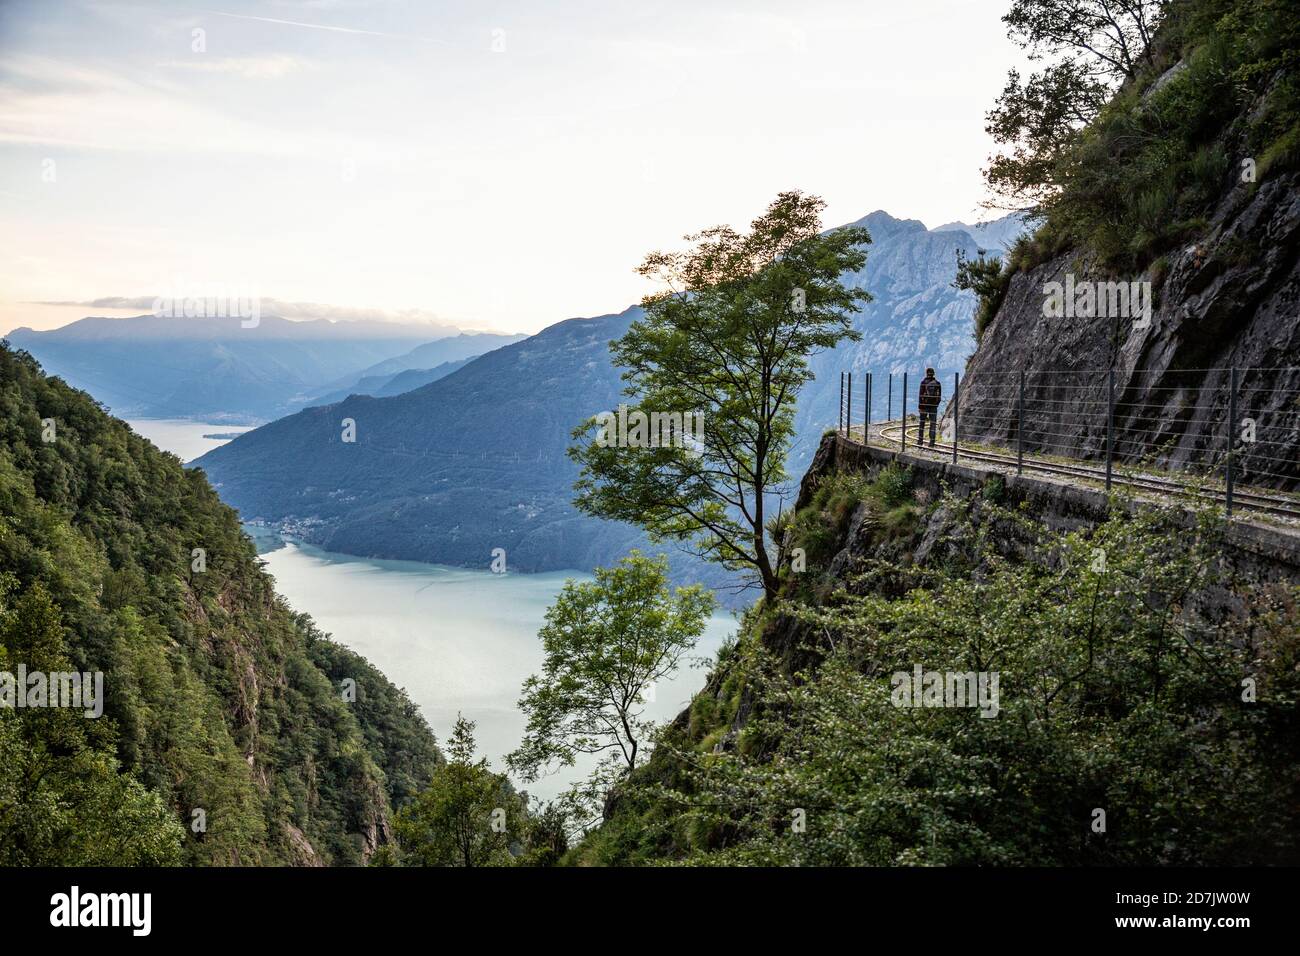 Italy, Province of Sondrio, Silhouette of hiker admiring Lake Mezzola from fenced edge of Tracciolino trail Stock Photo